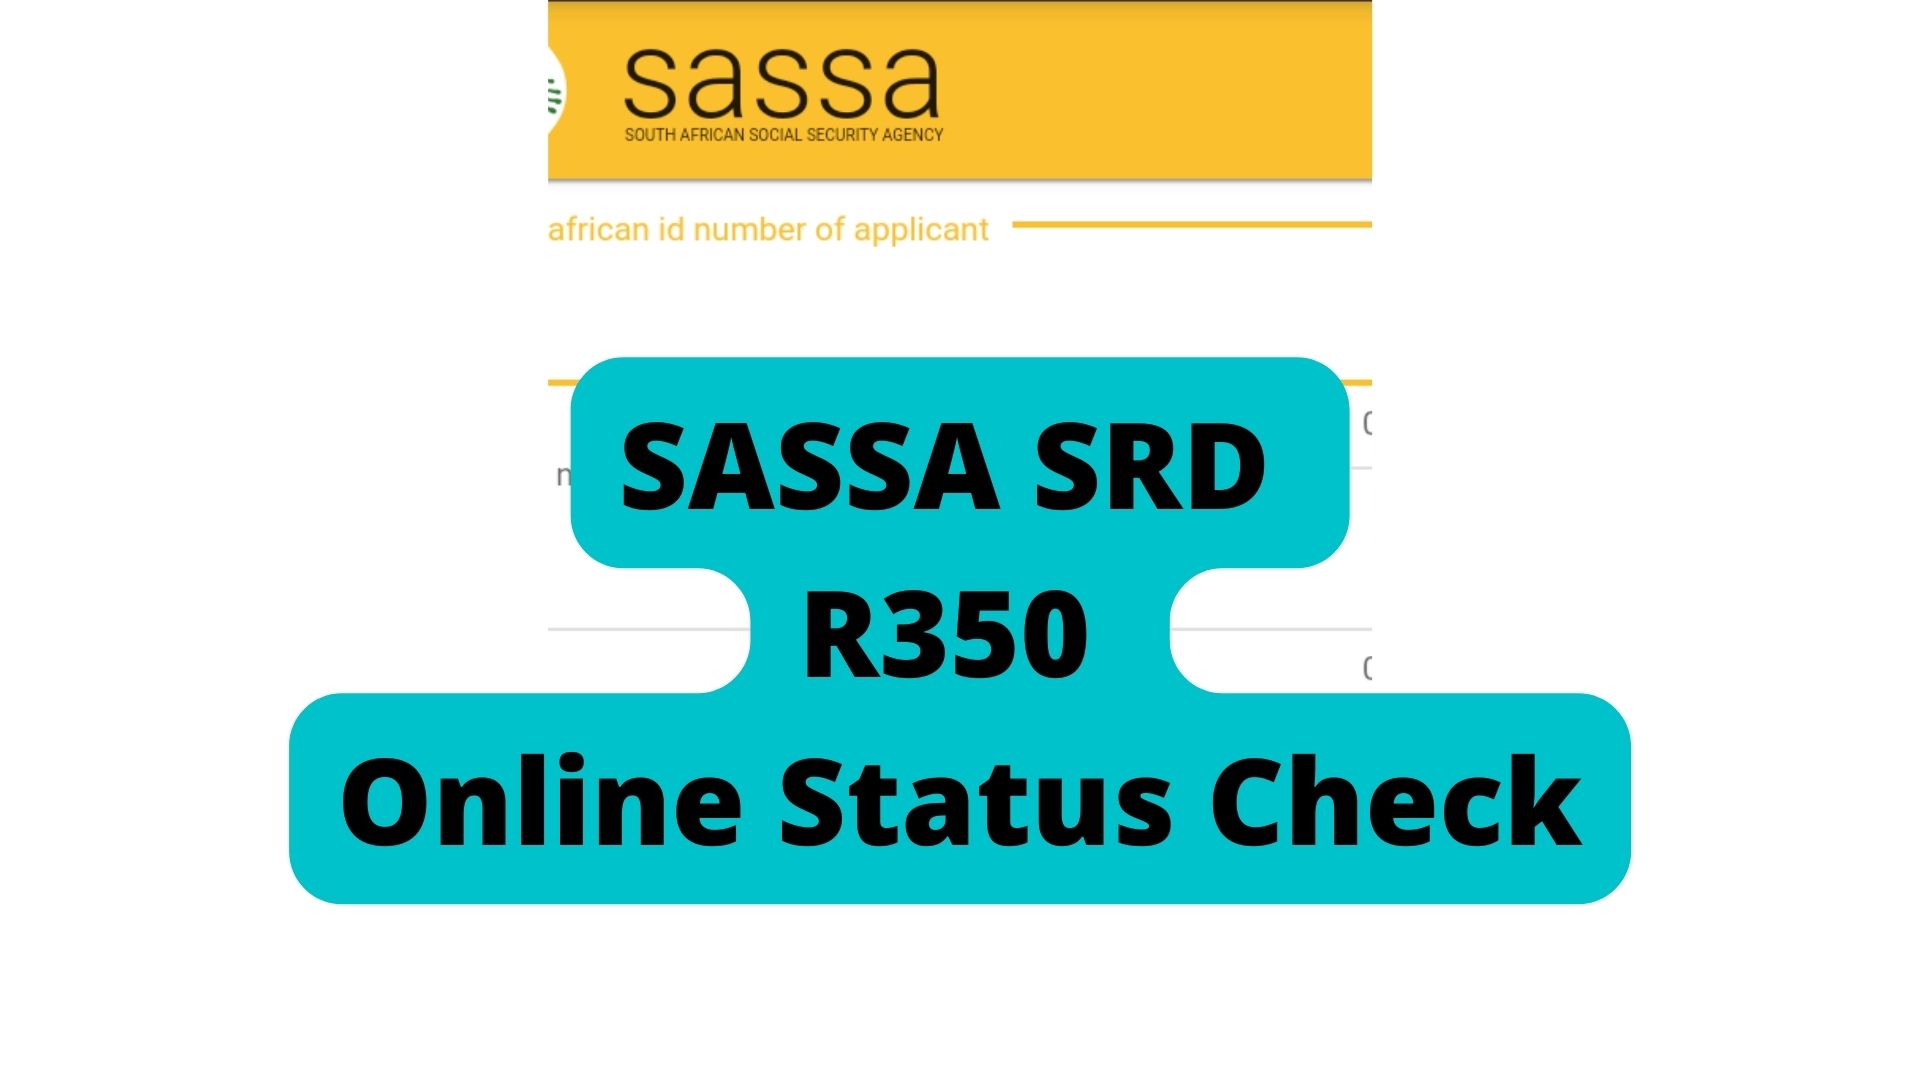 SASSA SRD R350 Online Status Check